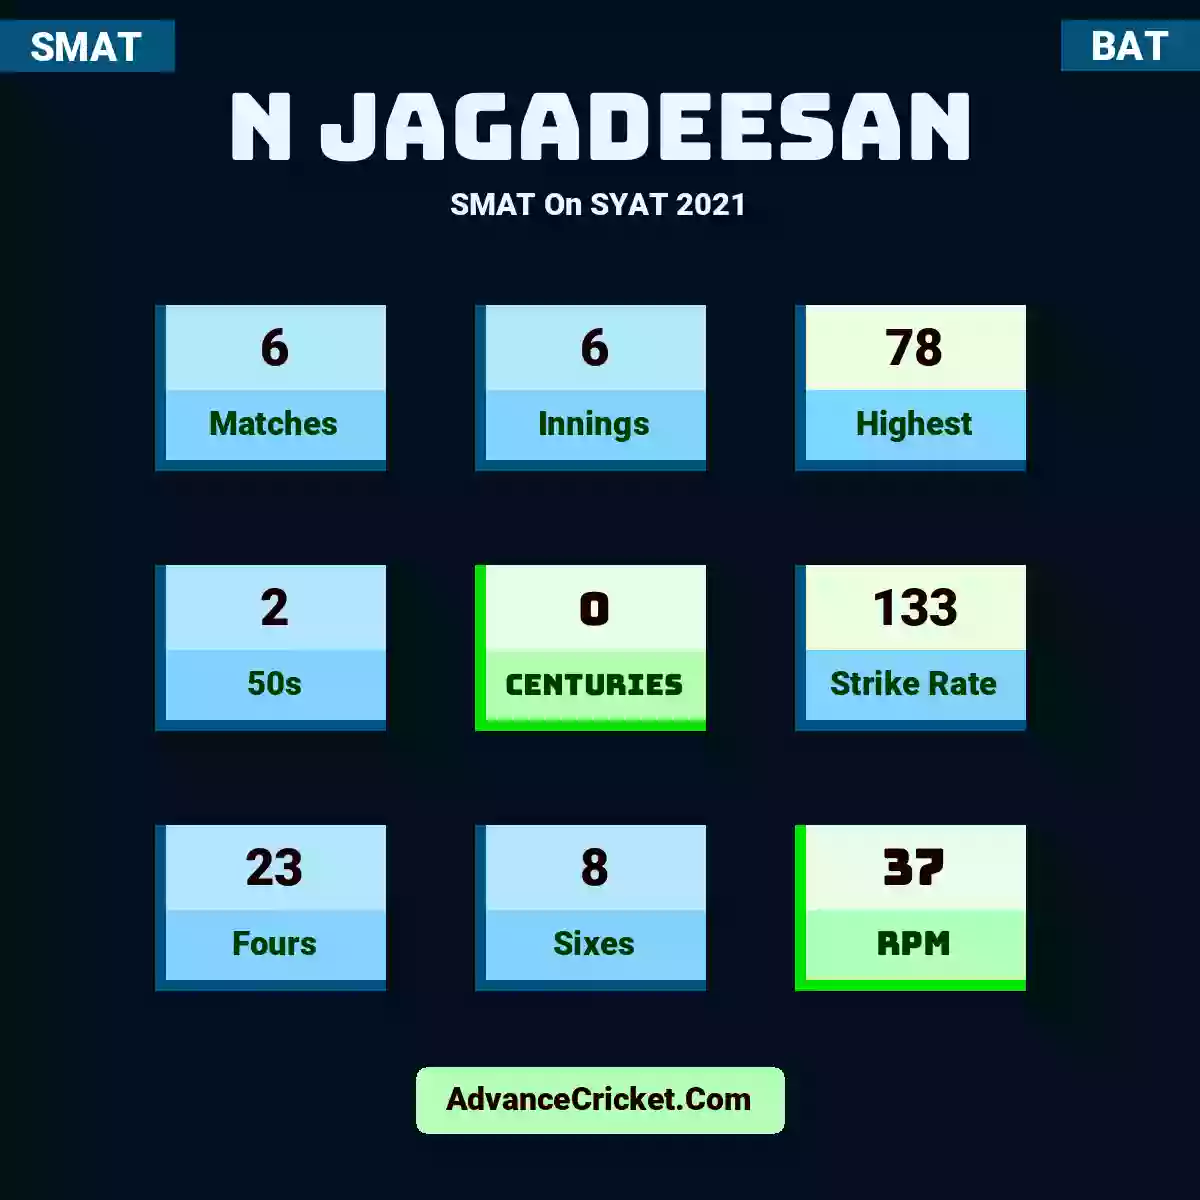 N Jagadeesan SMAT  On SYAT 2021, N Jagadeesan played 6 matches, scored 78 runs as highest, 2 half-centuries, and 0 centuries, with a strike rate of 133. N.Jagadeesan hit 23 fours and 8 sixes, with an RPM of 37.